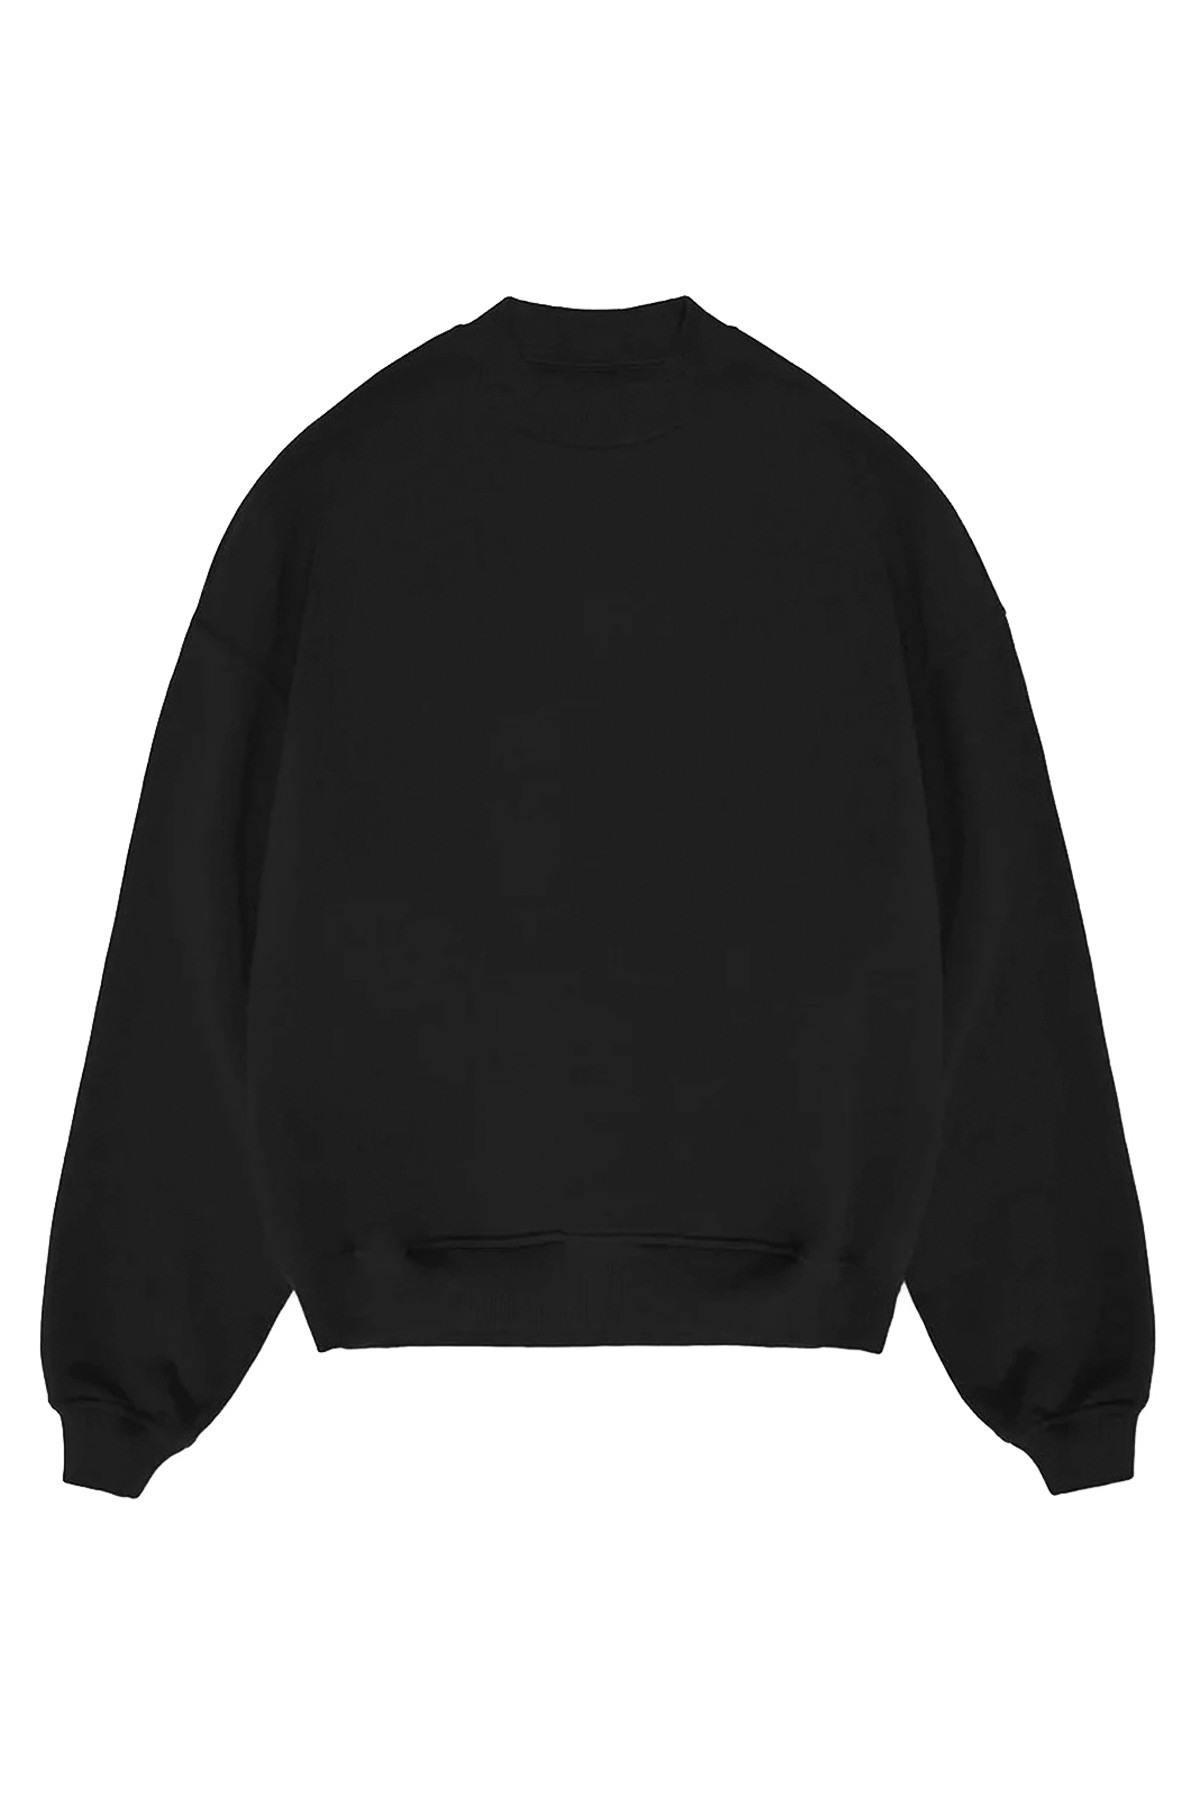 Jeu - Oversize Sweatshirt - BLACK